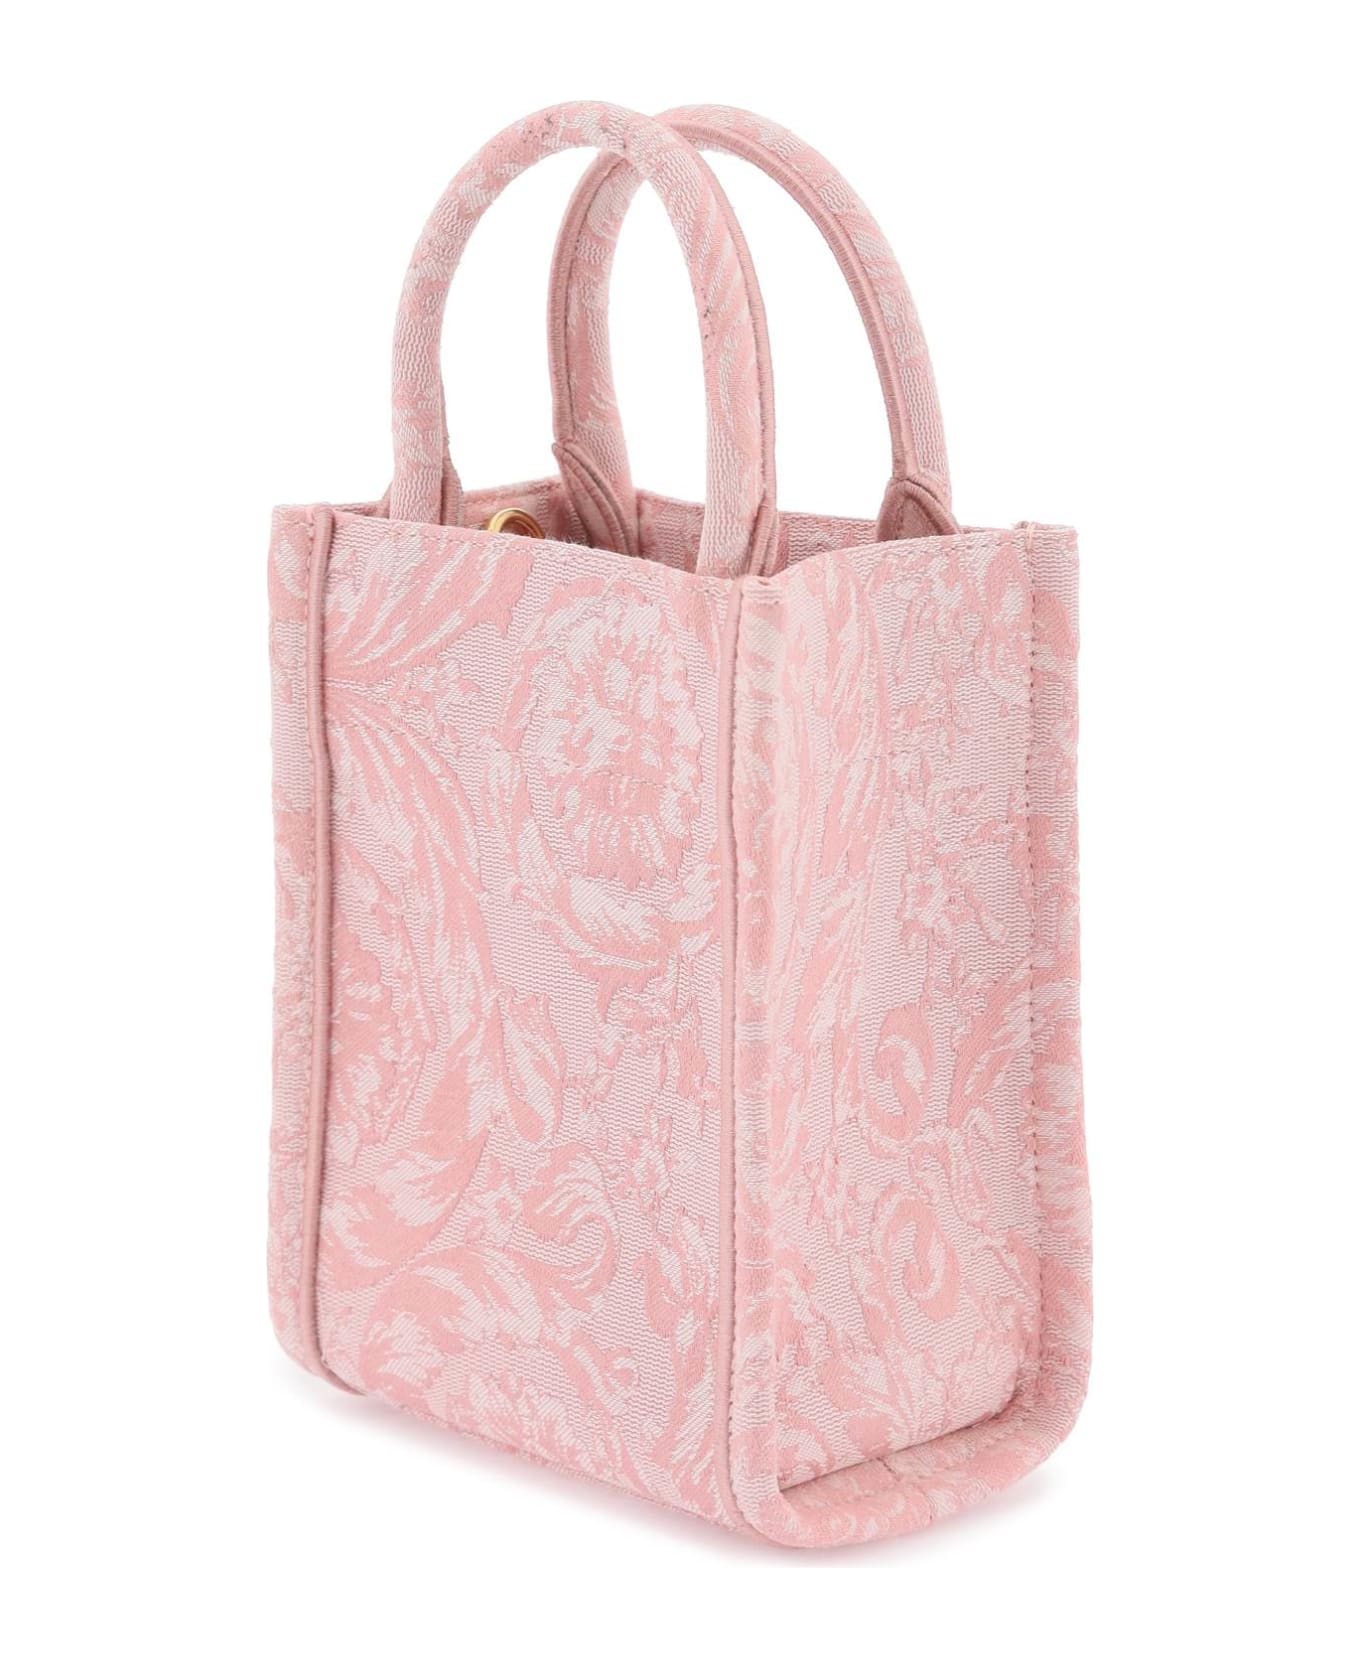 Versace Athena Barocco Mini Tote Bag - PALE PINK ENGLISH ROSE VE (Pink)